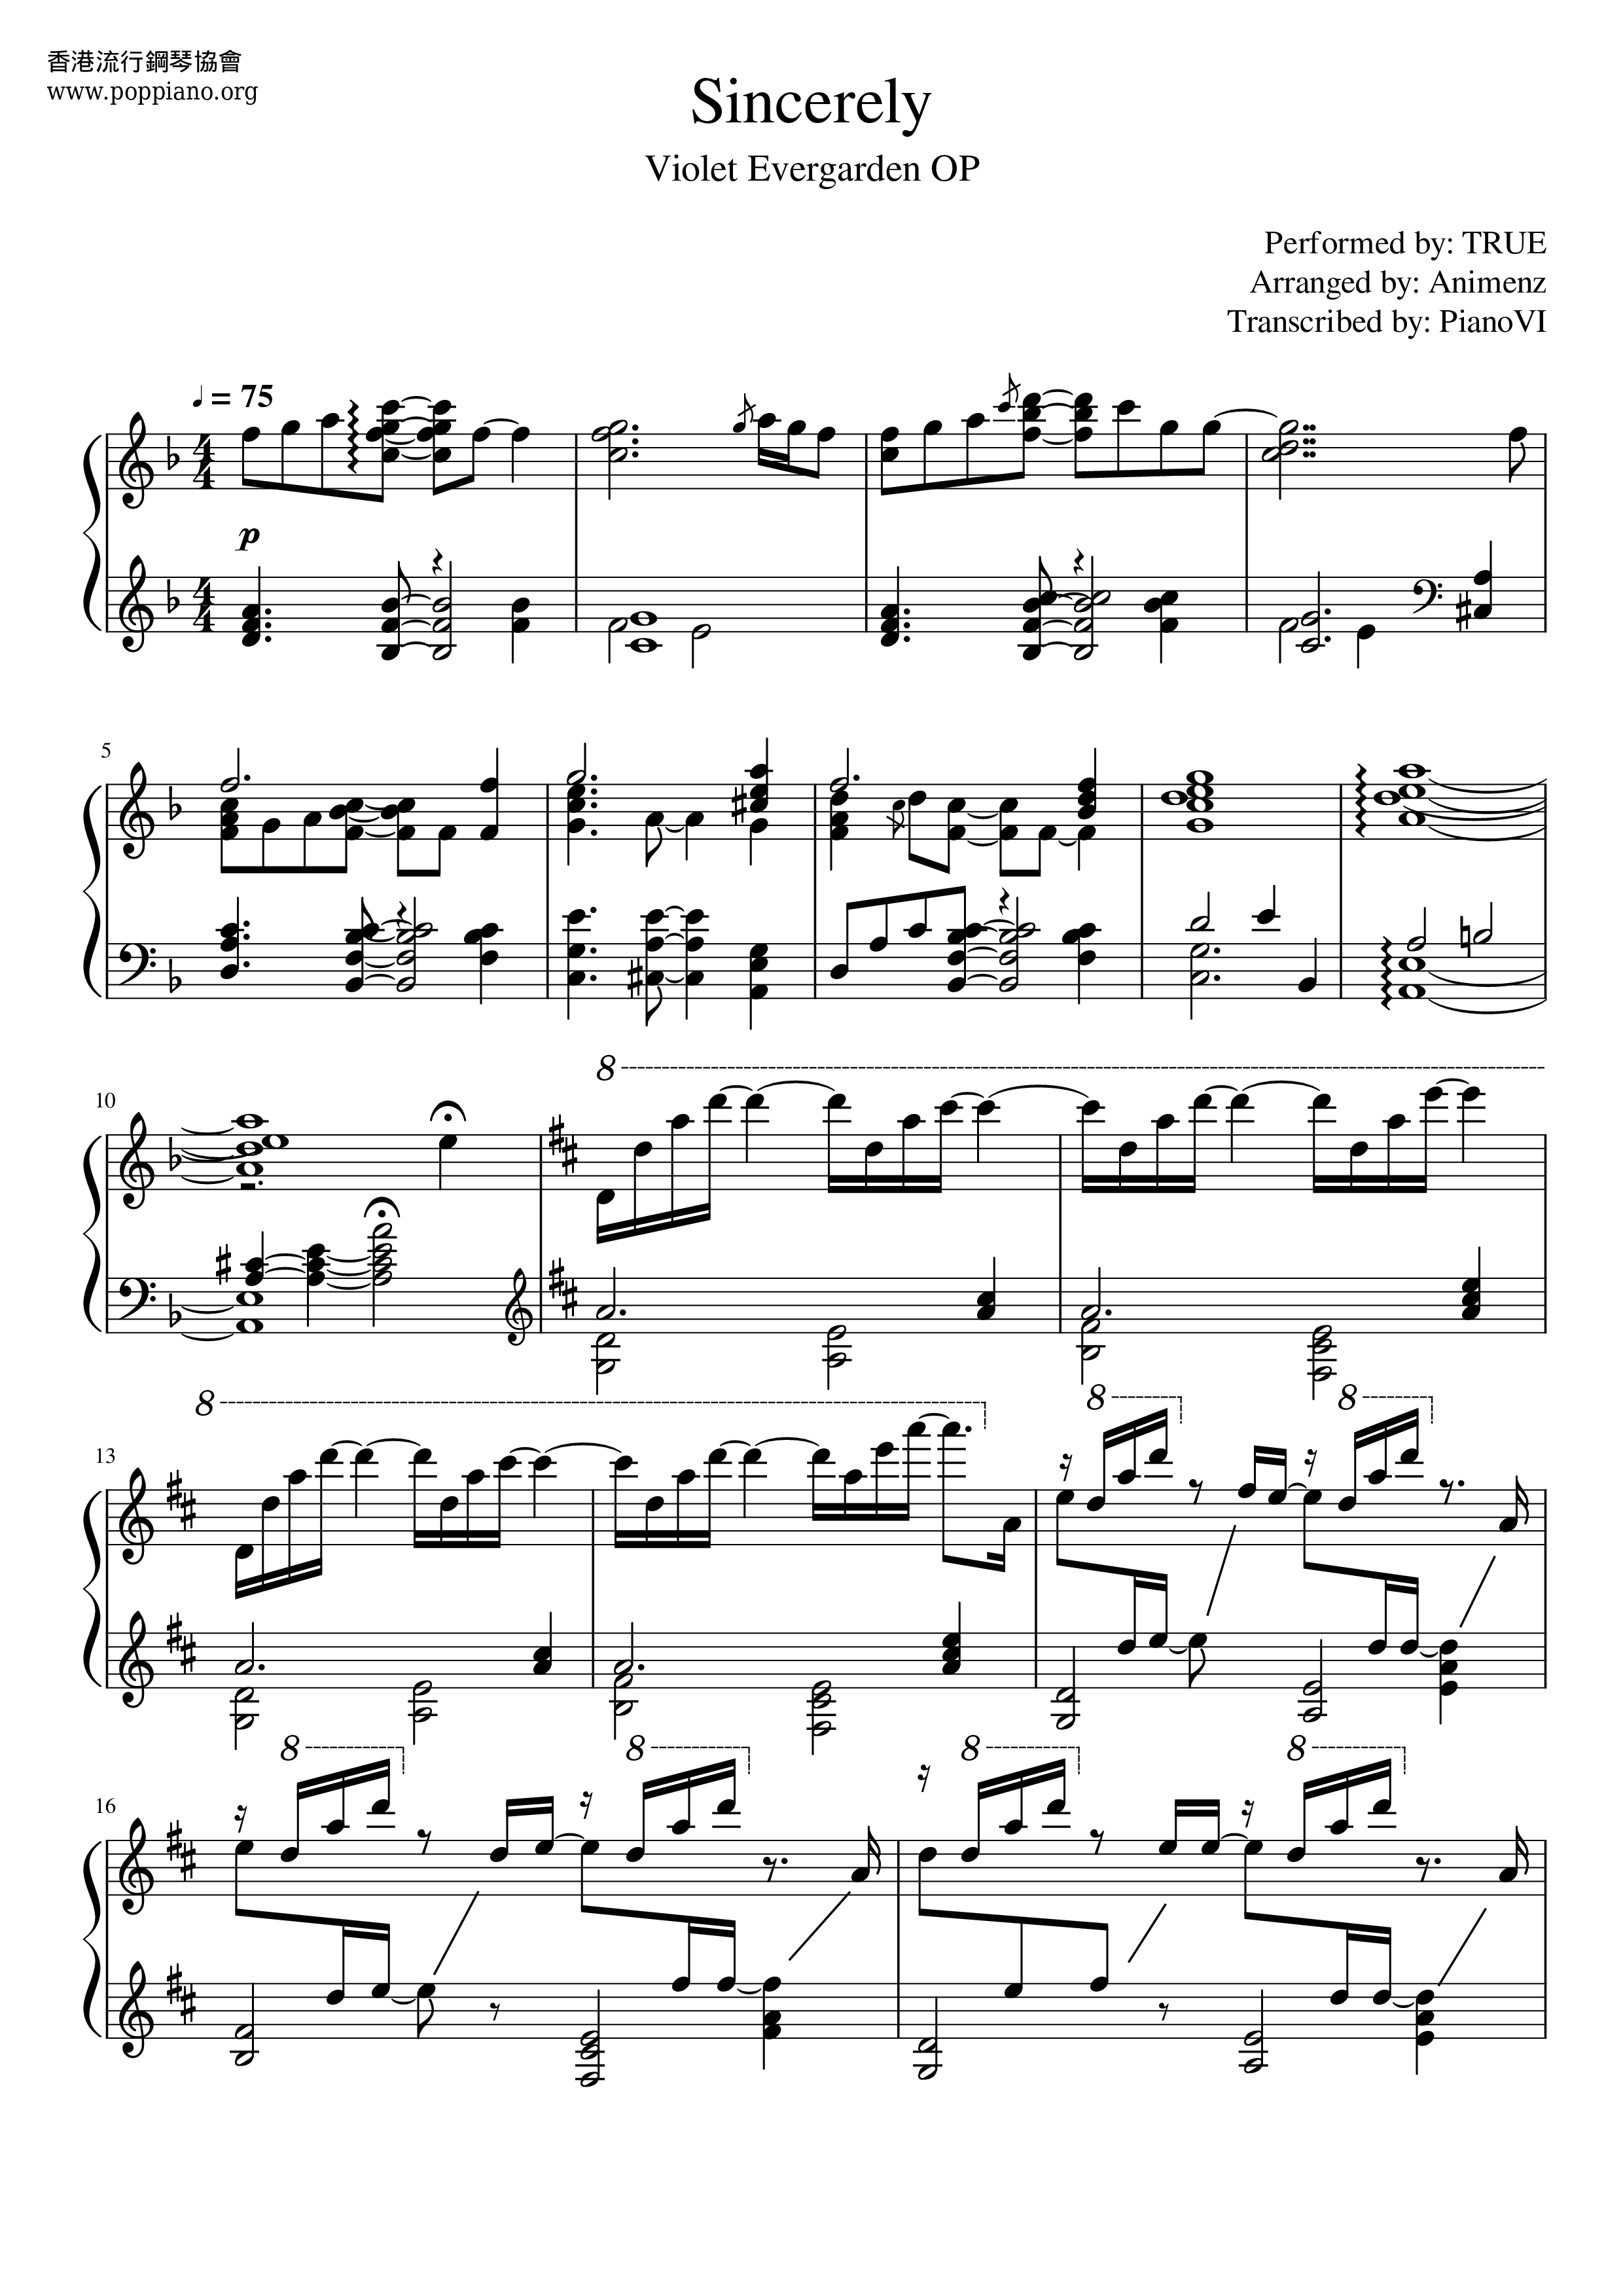 Violet Evergarden - Sincerely Score